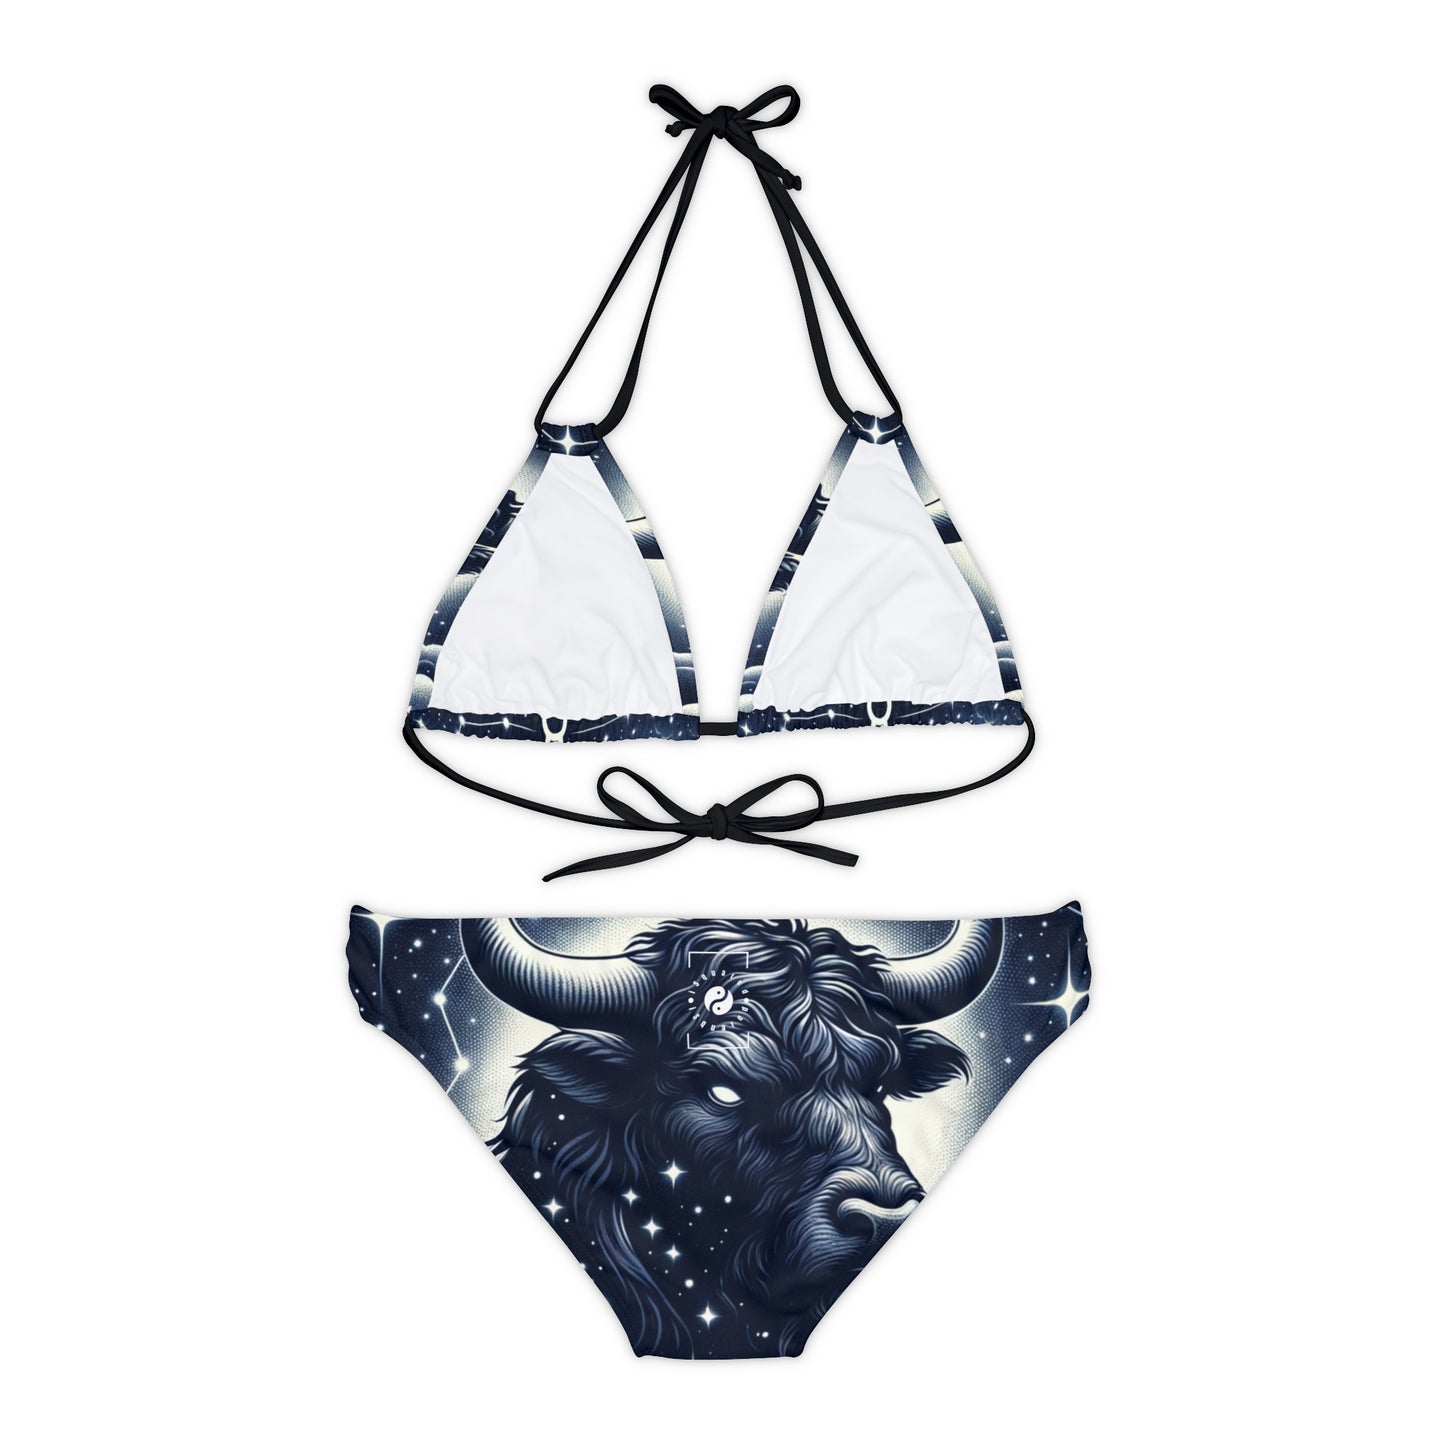 Celestial Taurine Constellation - Lace-up Bikini Set